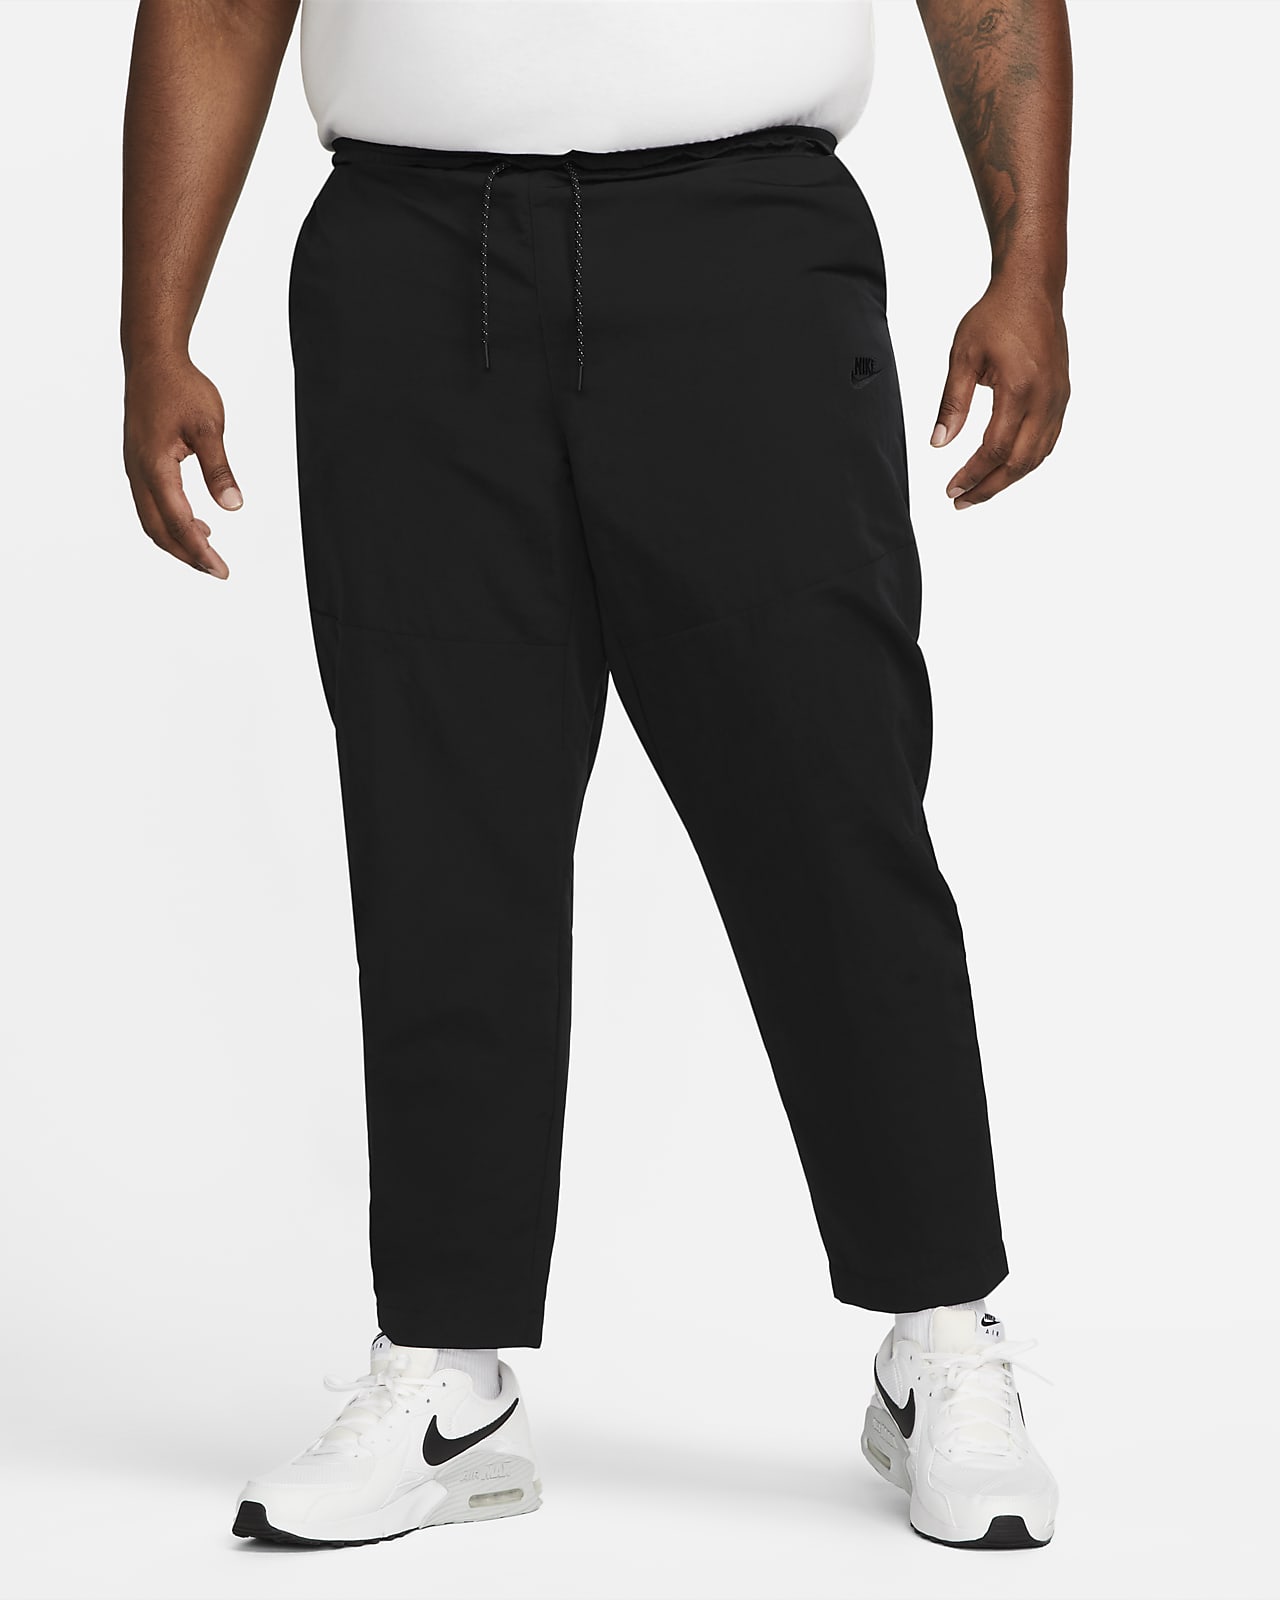 sportswear tech essentials mens lined commuter pants